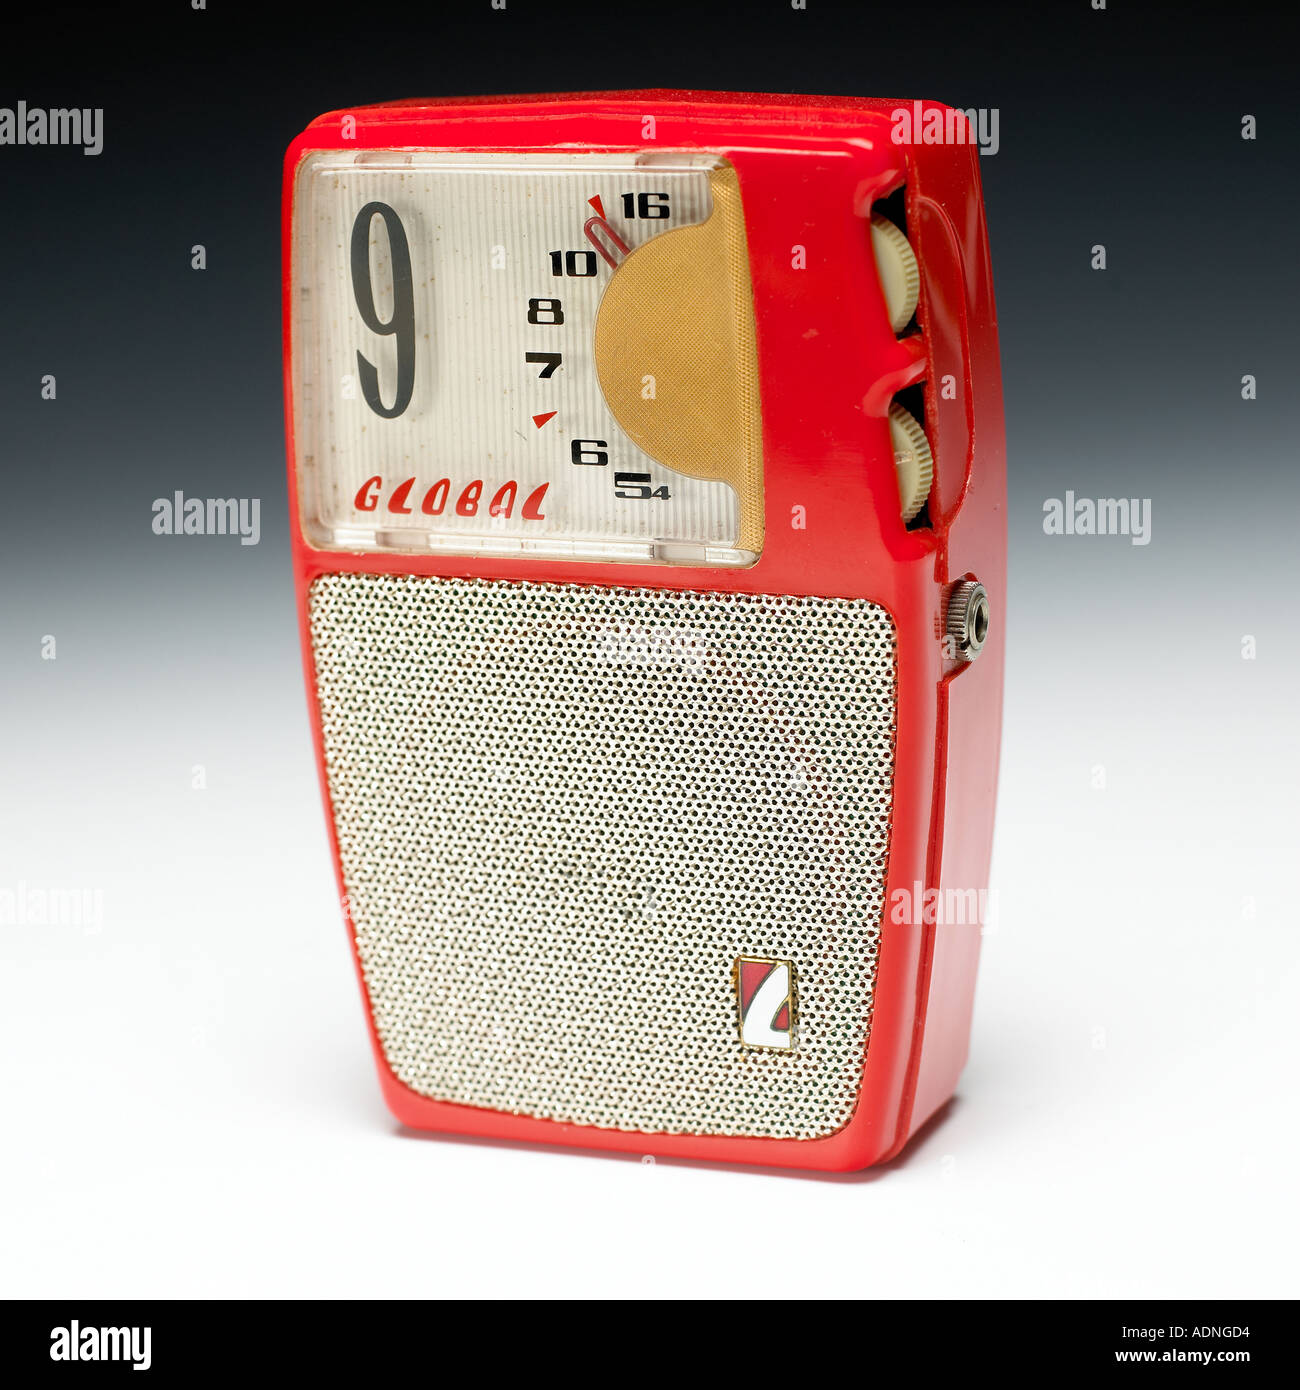 global 9 transistor radio Stock Photo - Alamy